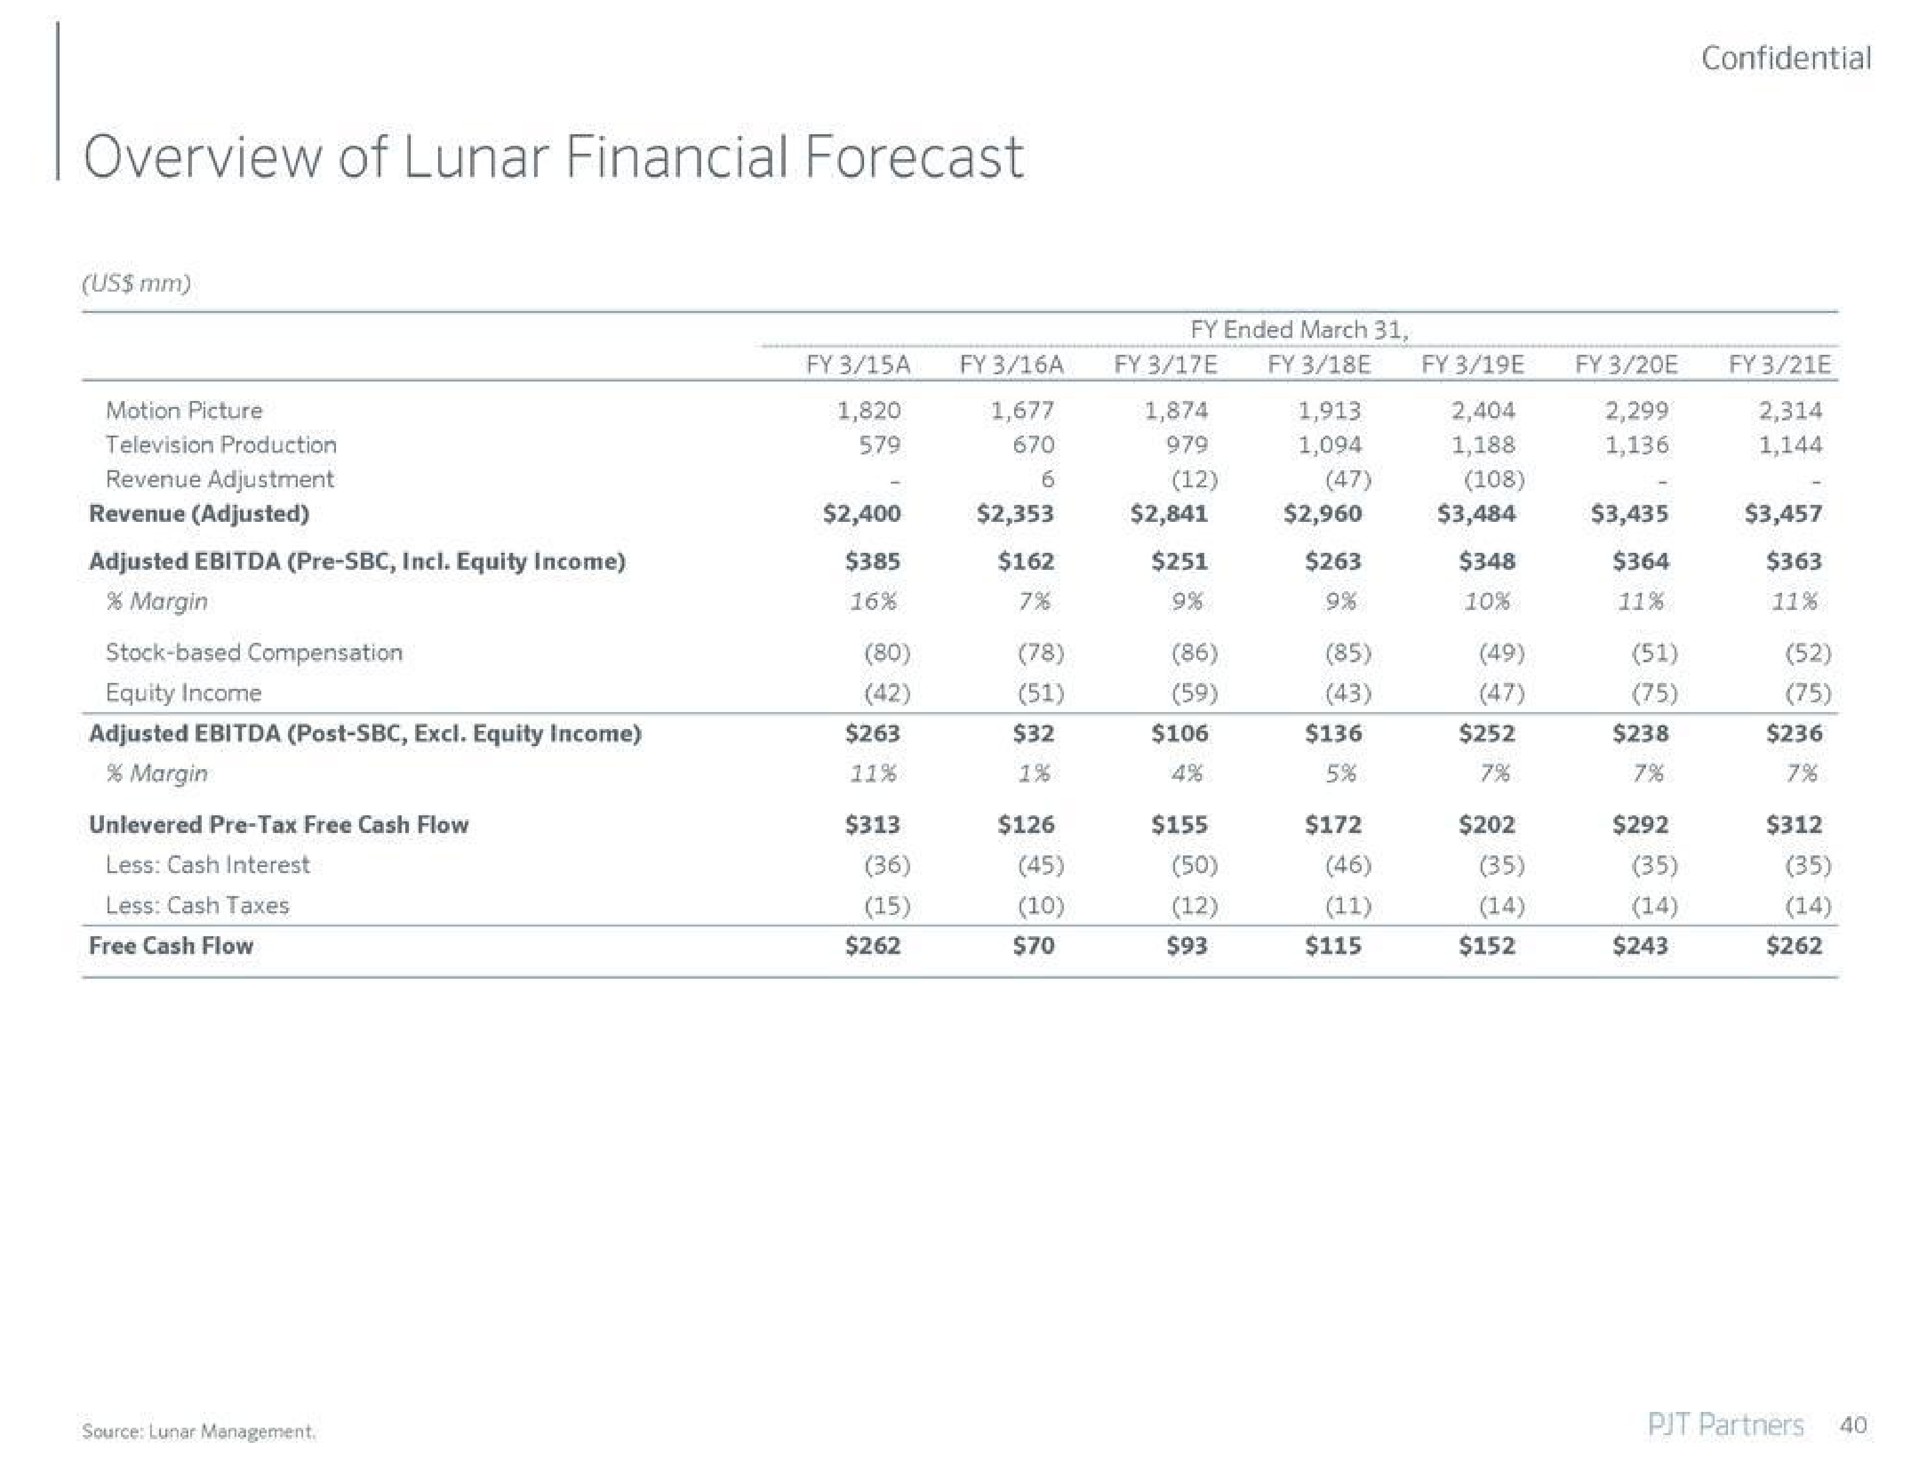 overview of lunar financial forecast | PJT Partners